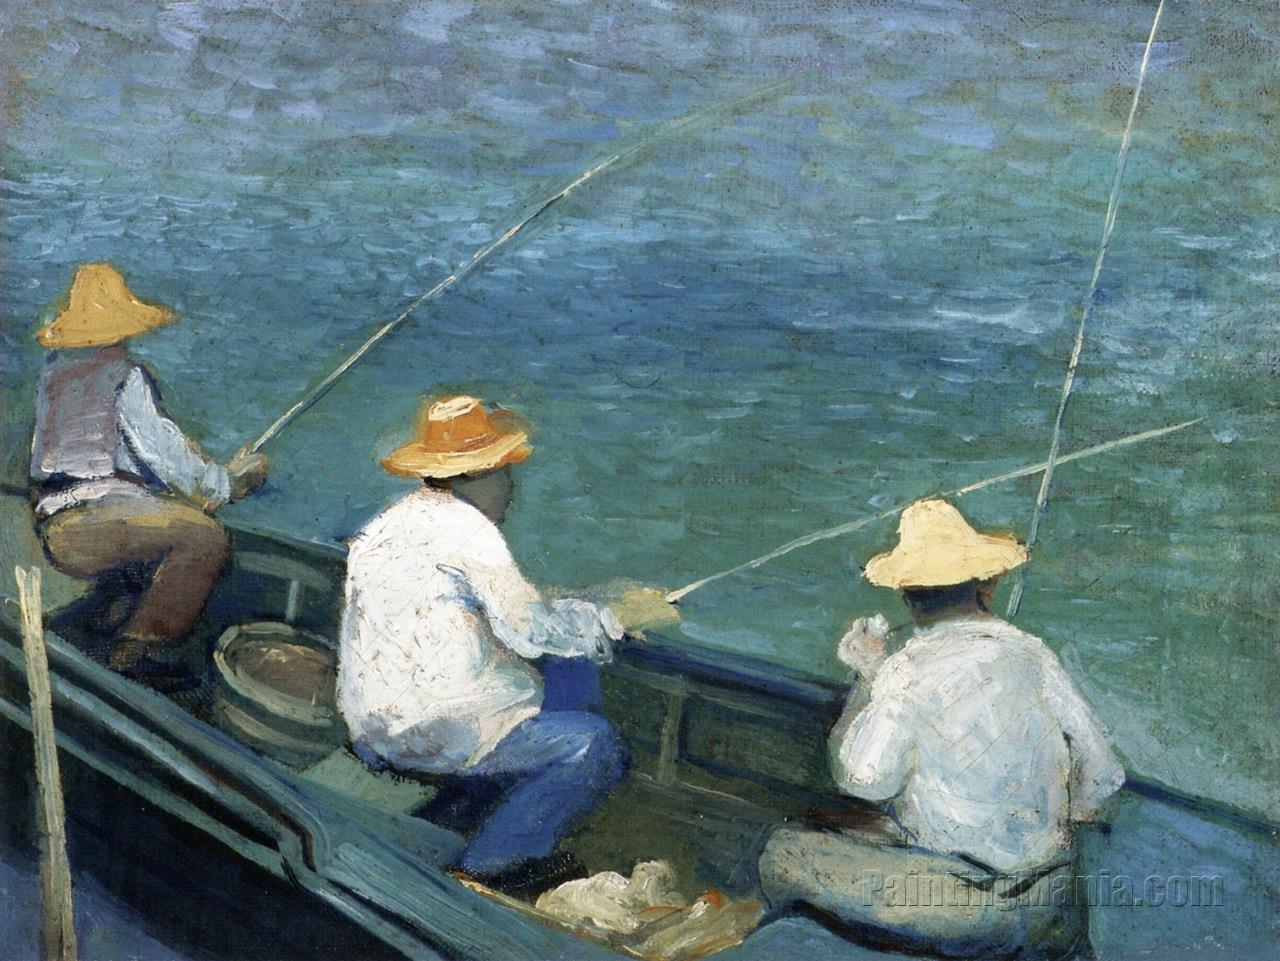 Three Fishermen in a Boat